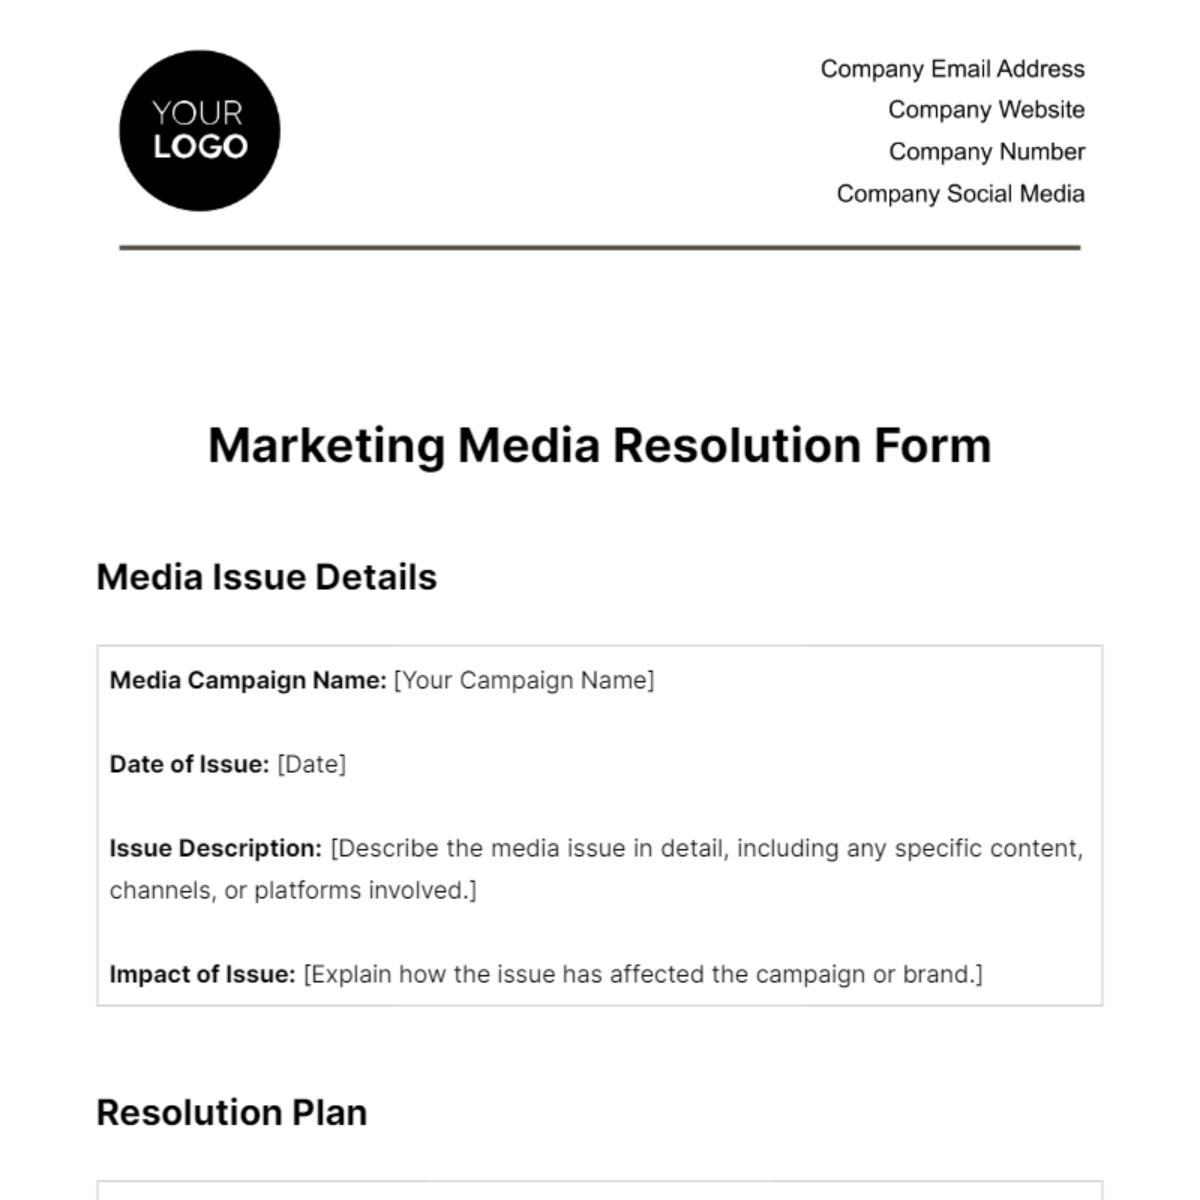 Marketing Media Resolution Form Template